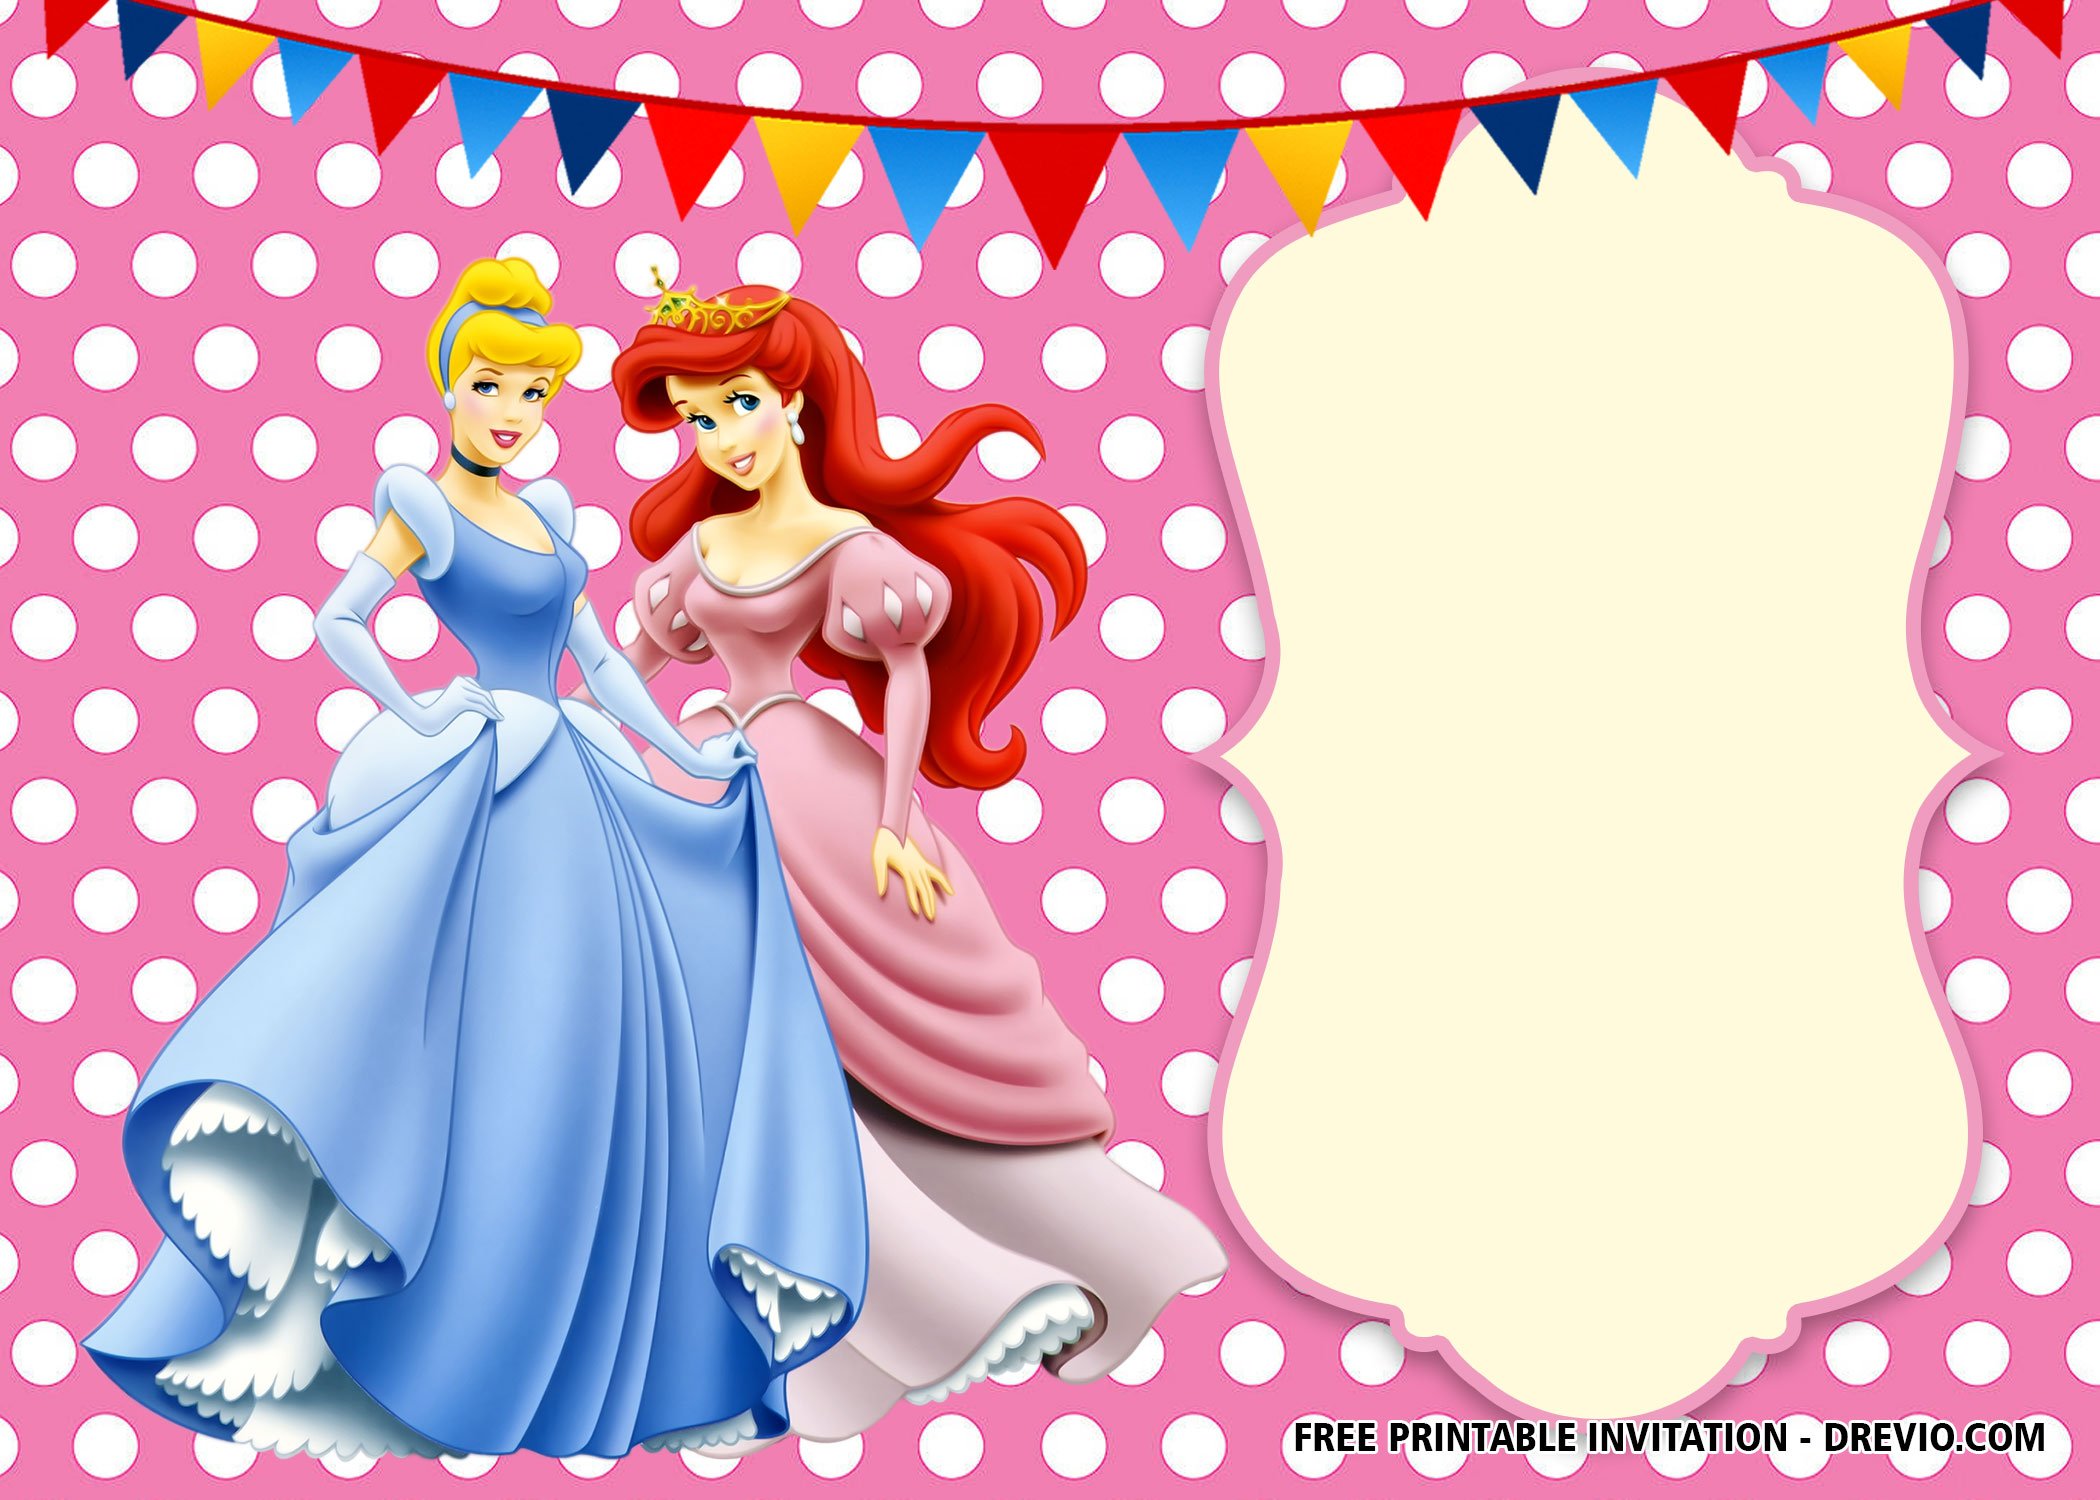 FREE Printable Disney Princess Polkadot Invitation Templates | DREVIO